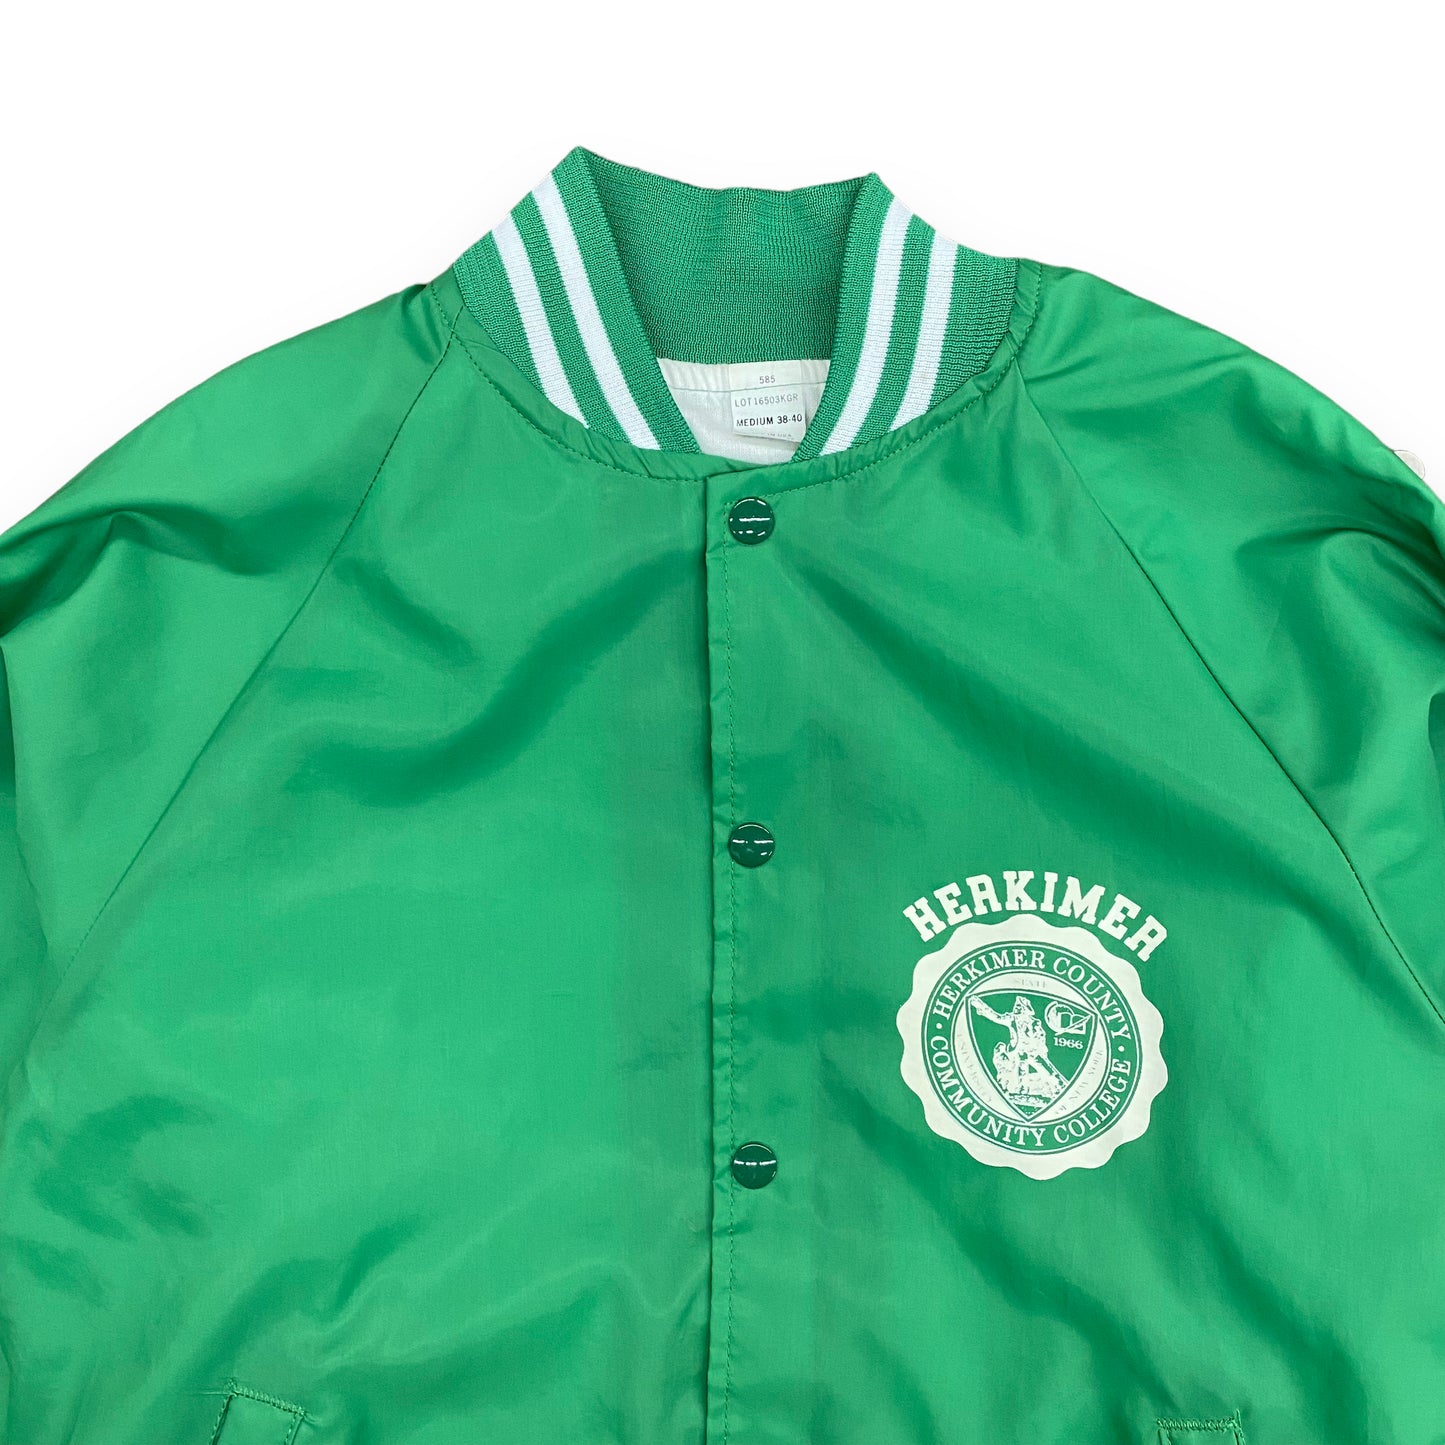 Vintage 80s/90s Herkimer County Community College Green Bomber Jacket - Size Medium